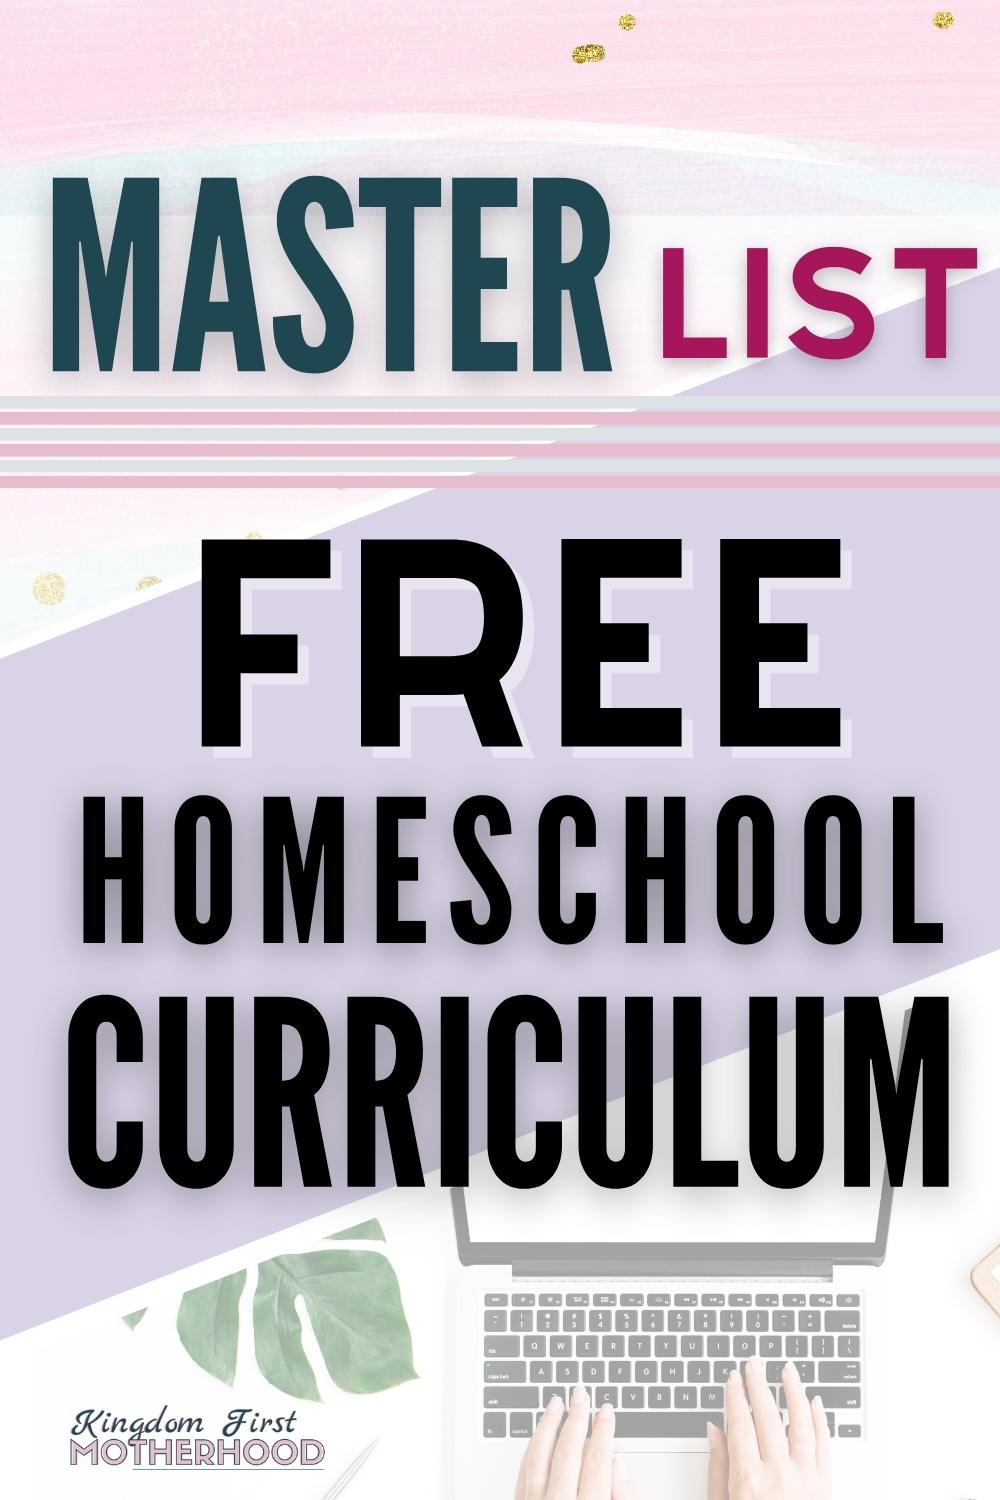 master-list-of-free-homeschool-curriculum-kingdom-first-motherhood-by